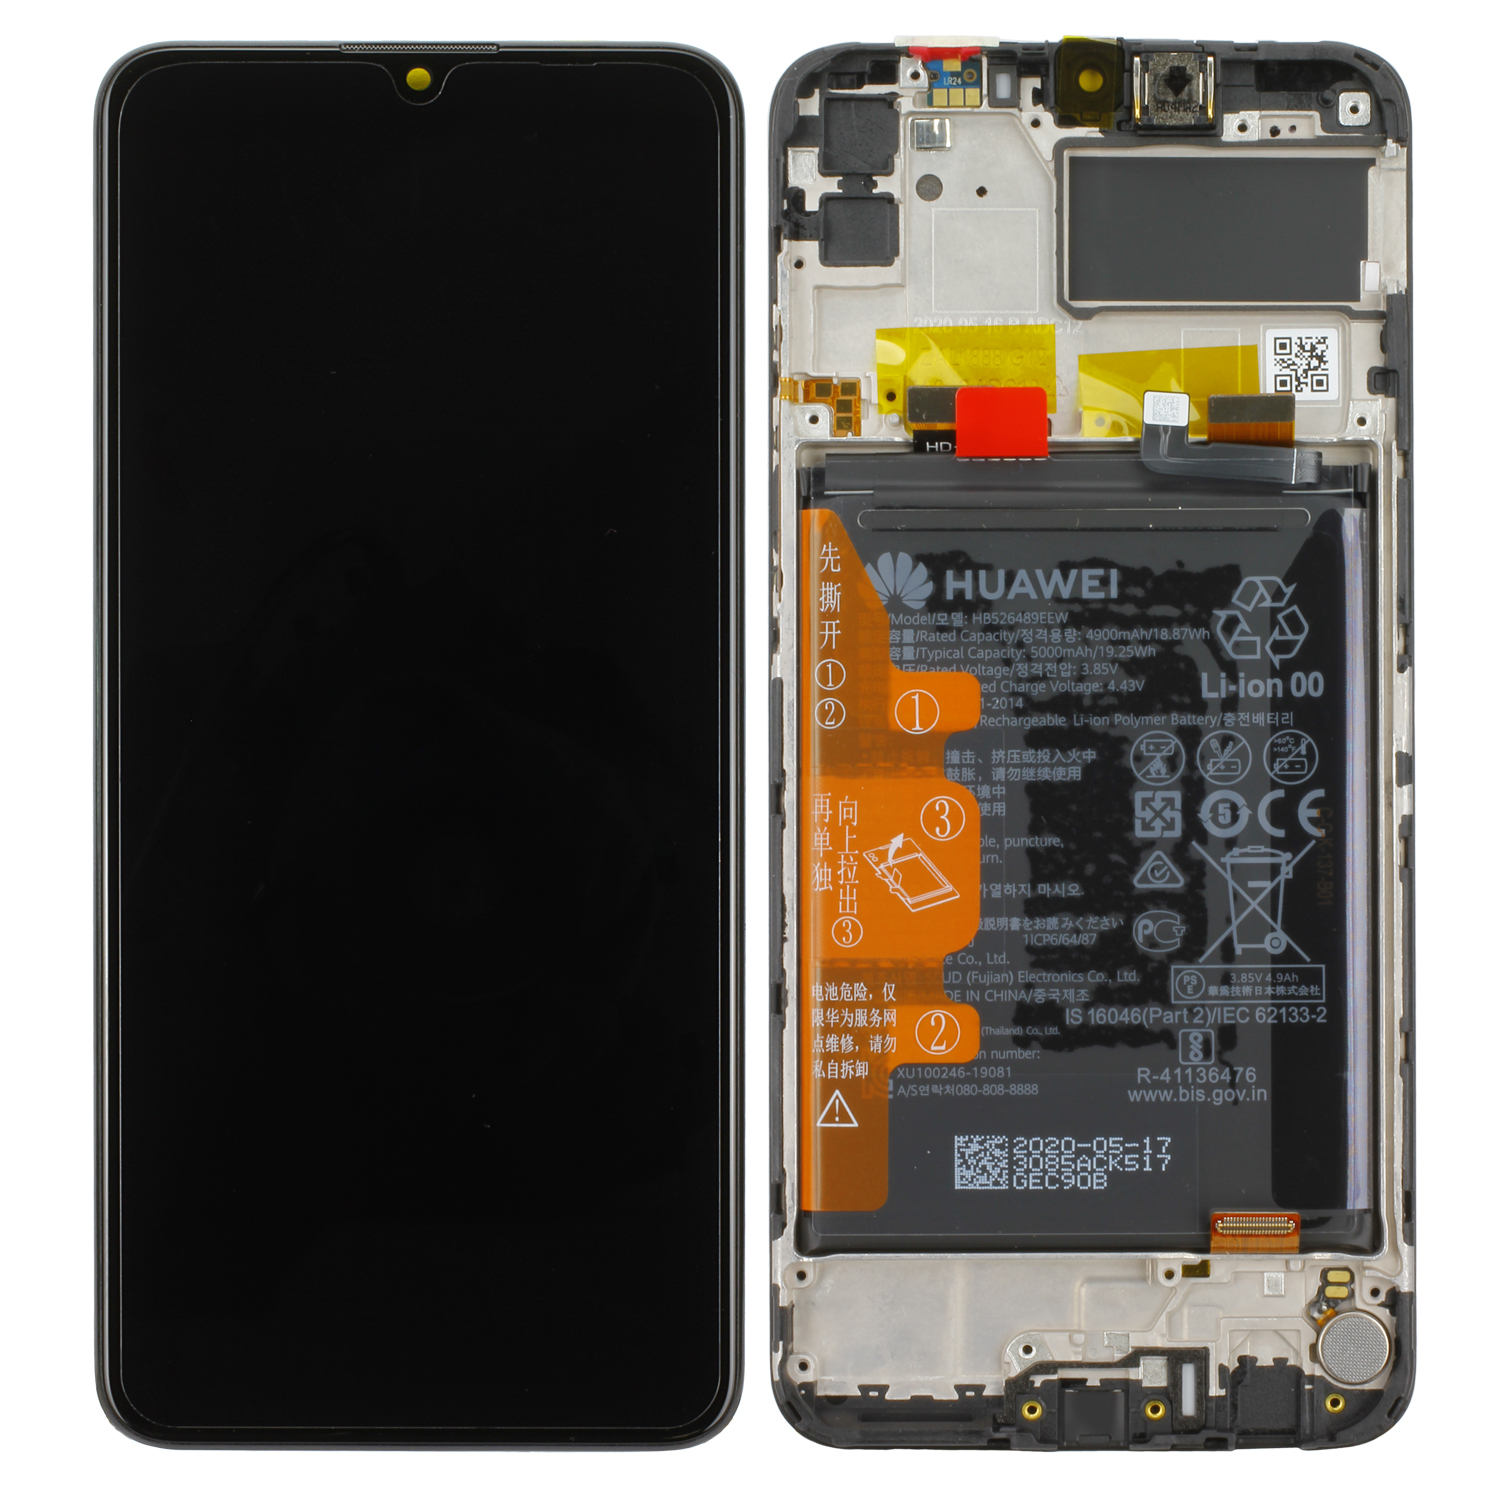 Huawei Y6 (MED-L49,MED-LX9N,MED-LX9) LCD Display Service Pack